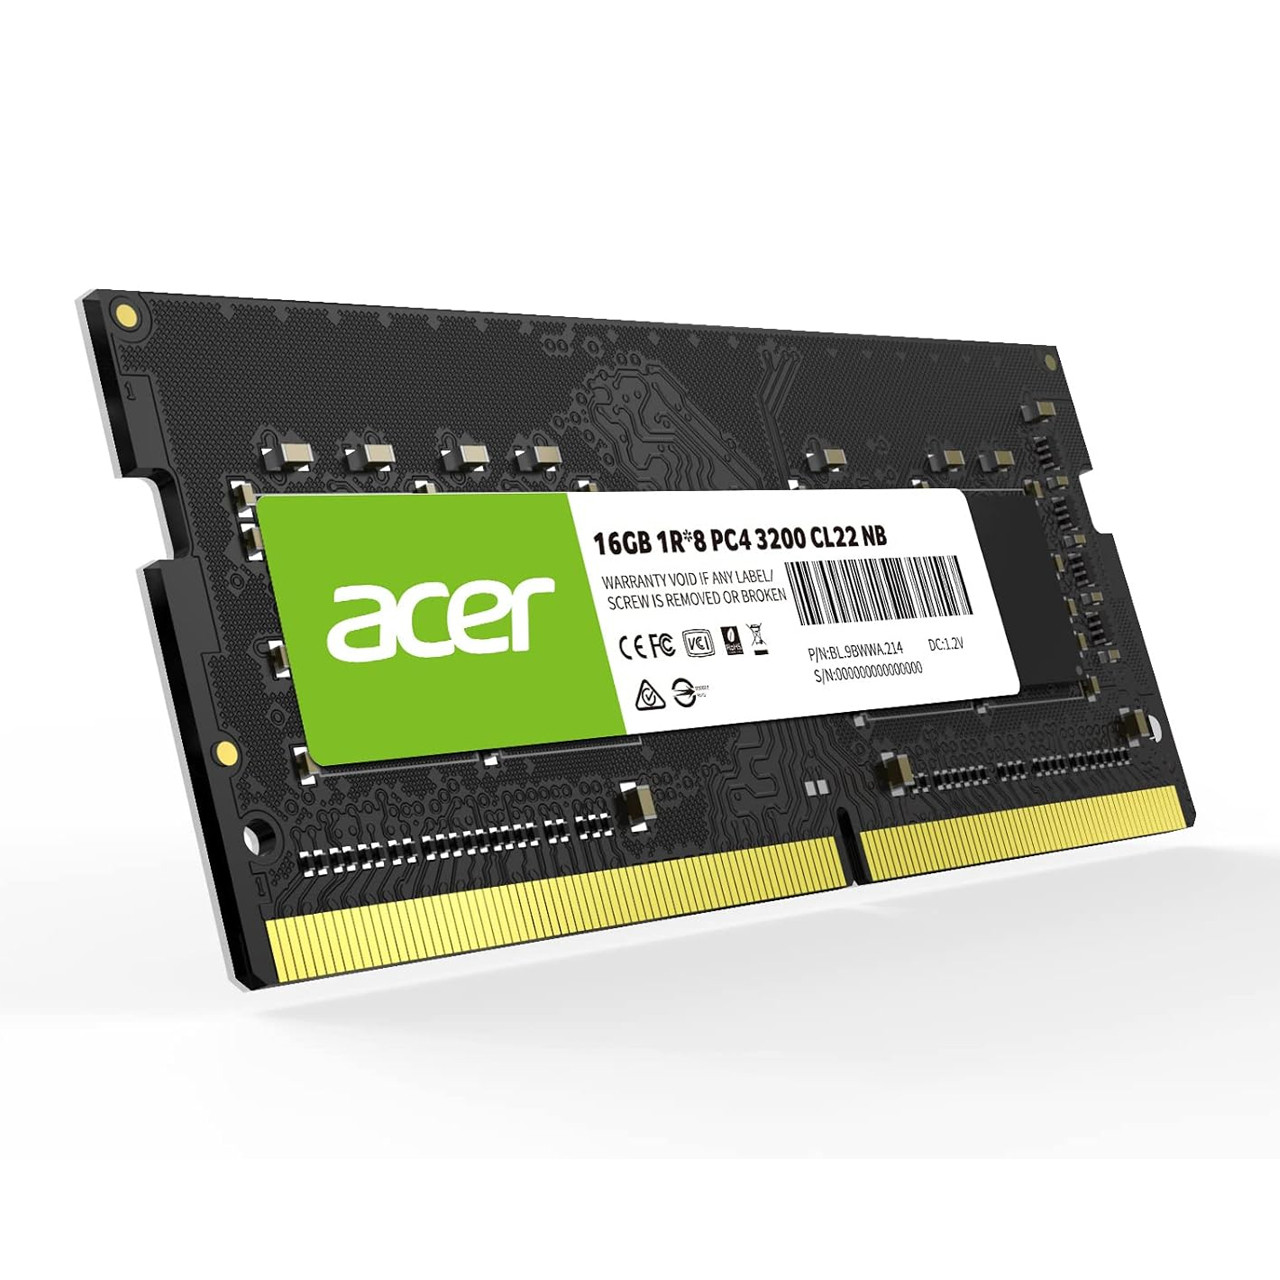 Acer SD100 16GB Single RAM 3200 MHz DDR4 CL22 1.2V Laptop Computer Memory (BL.9BWWA.214)